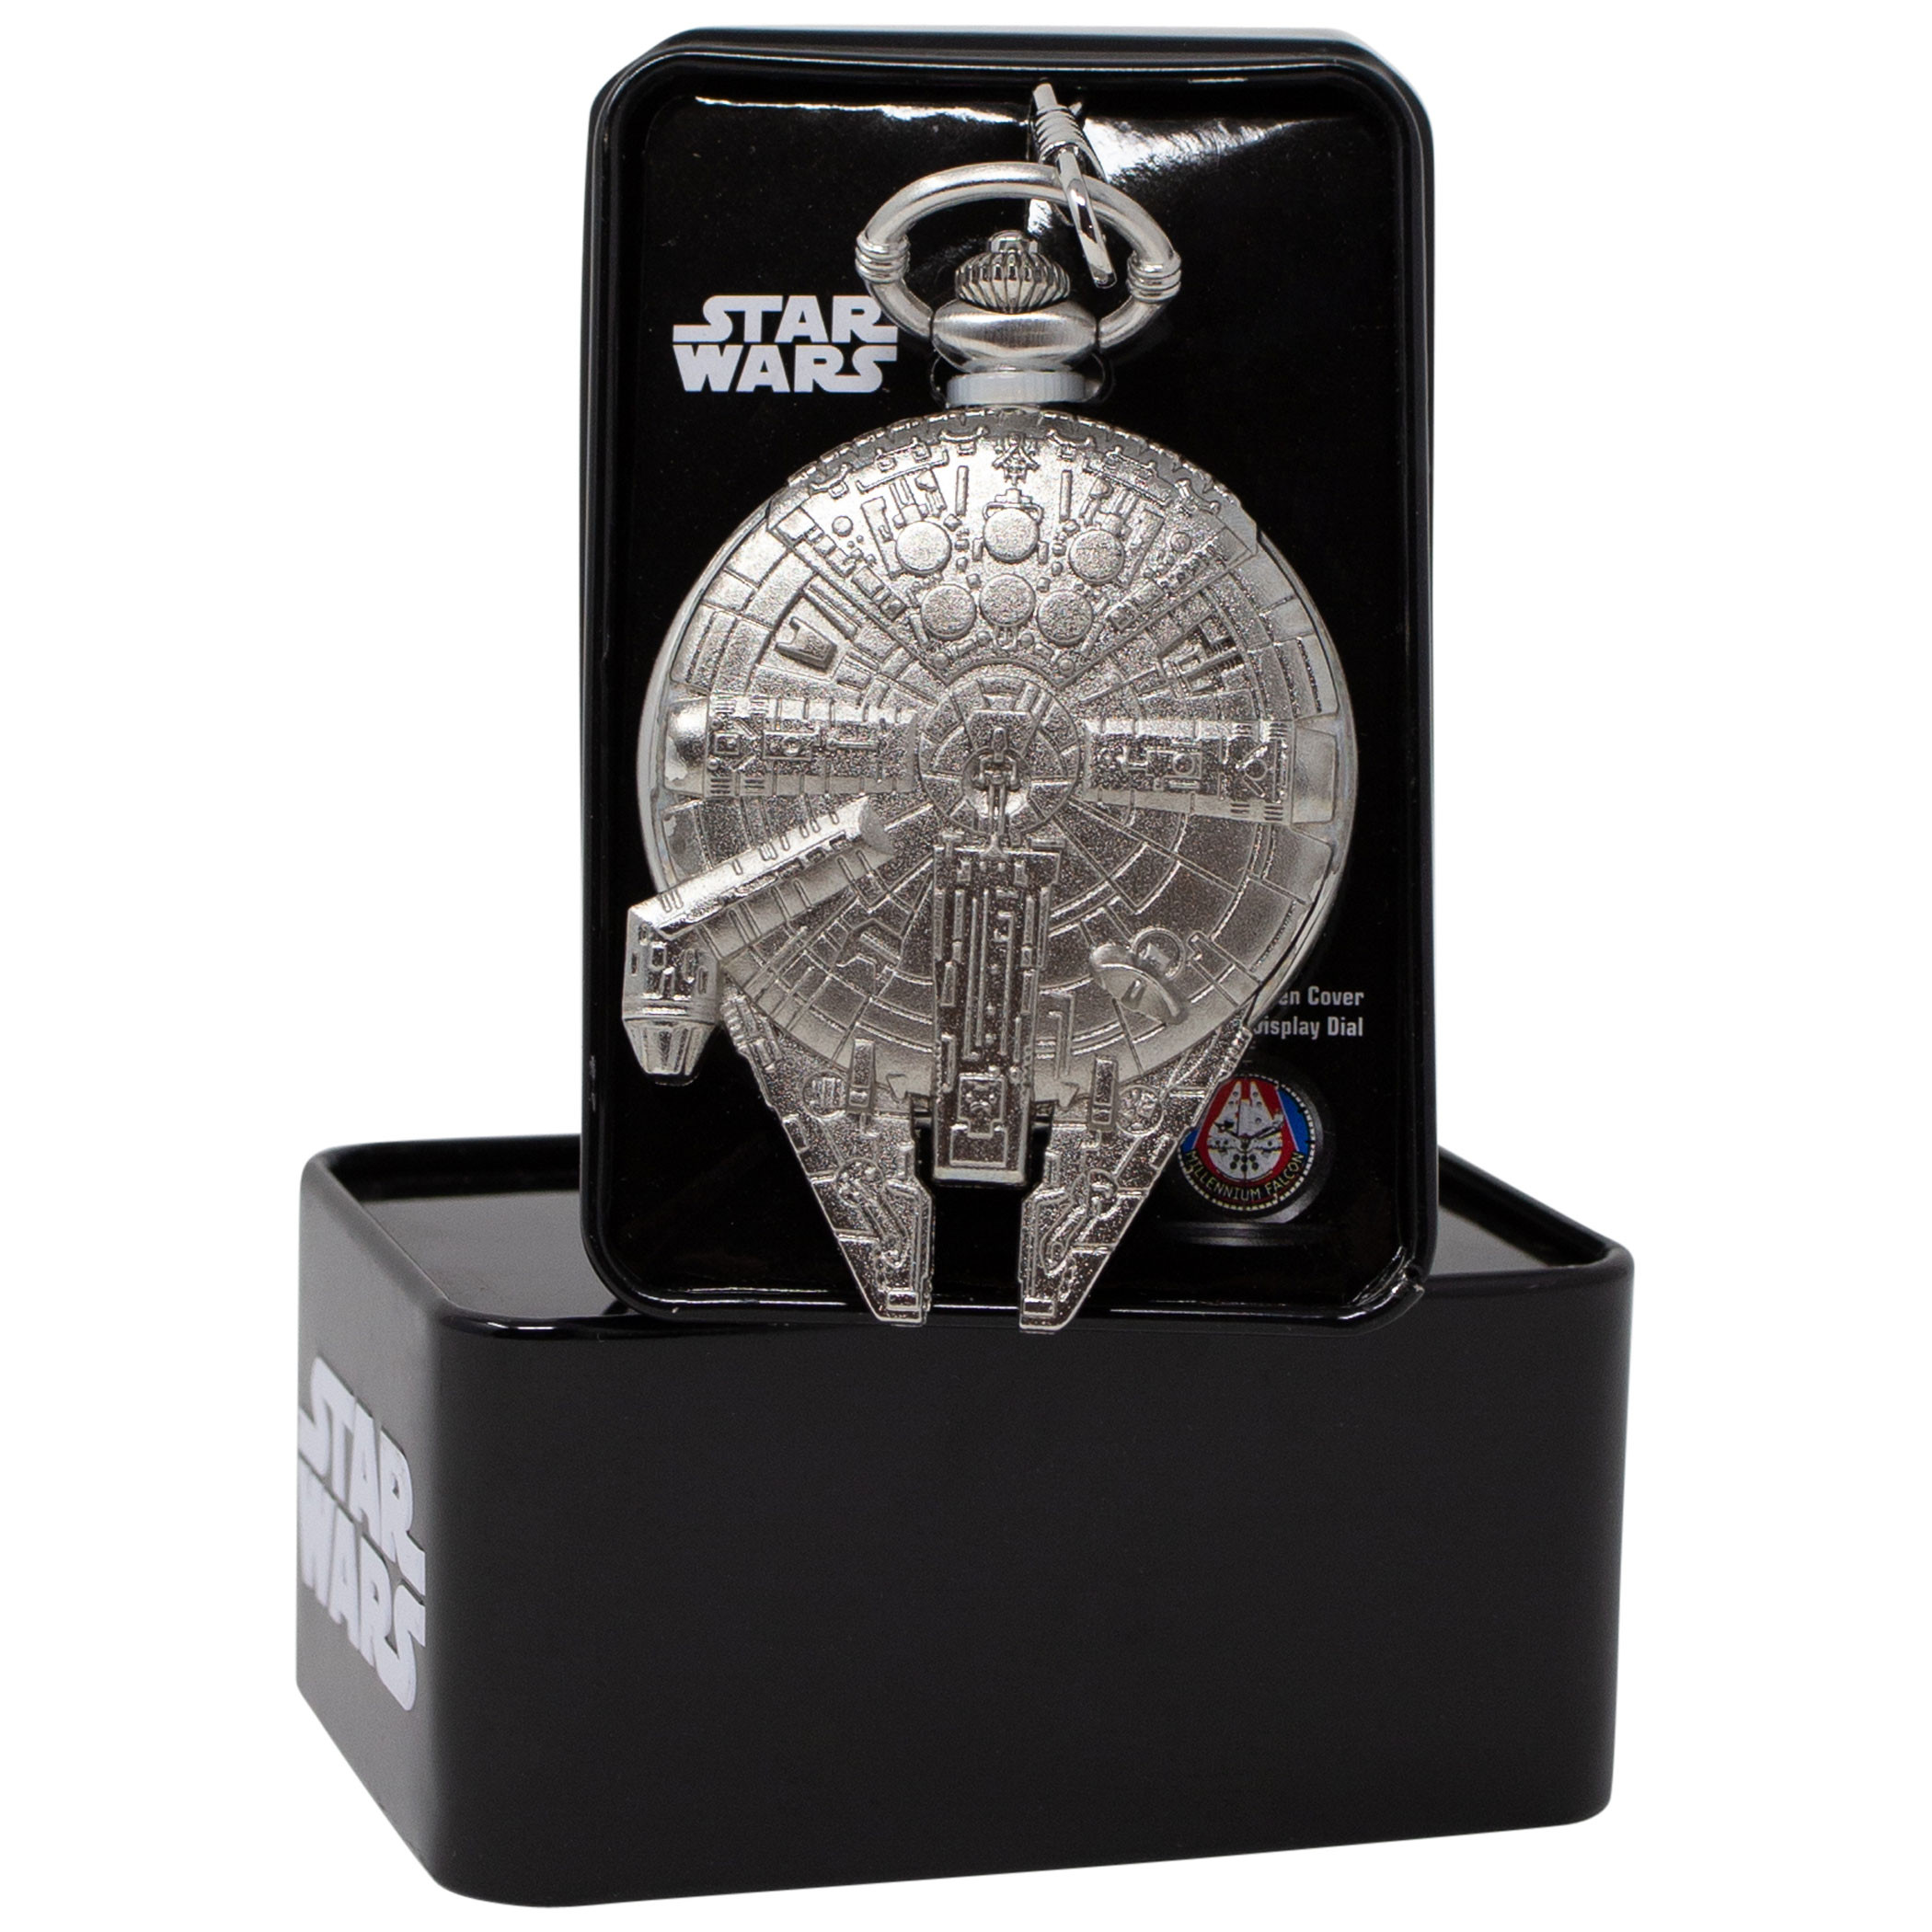 Star Wars Millennium Falcon Pocket Watch